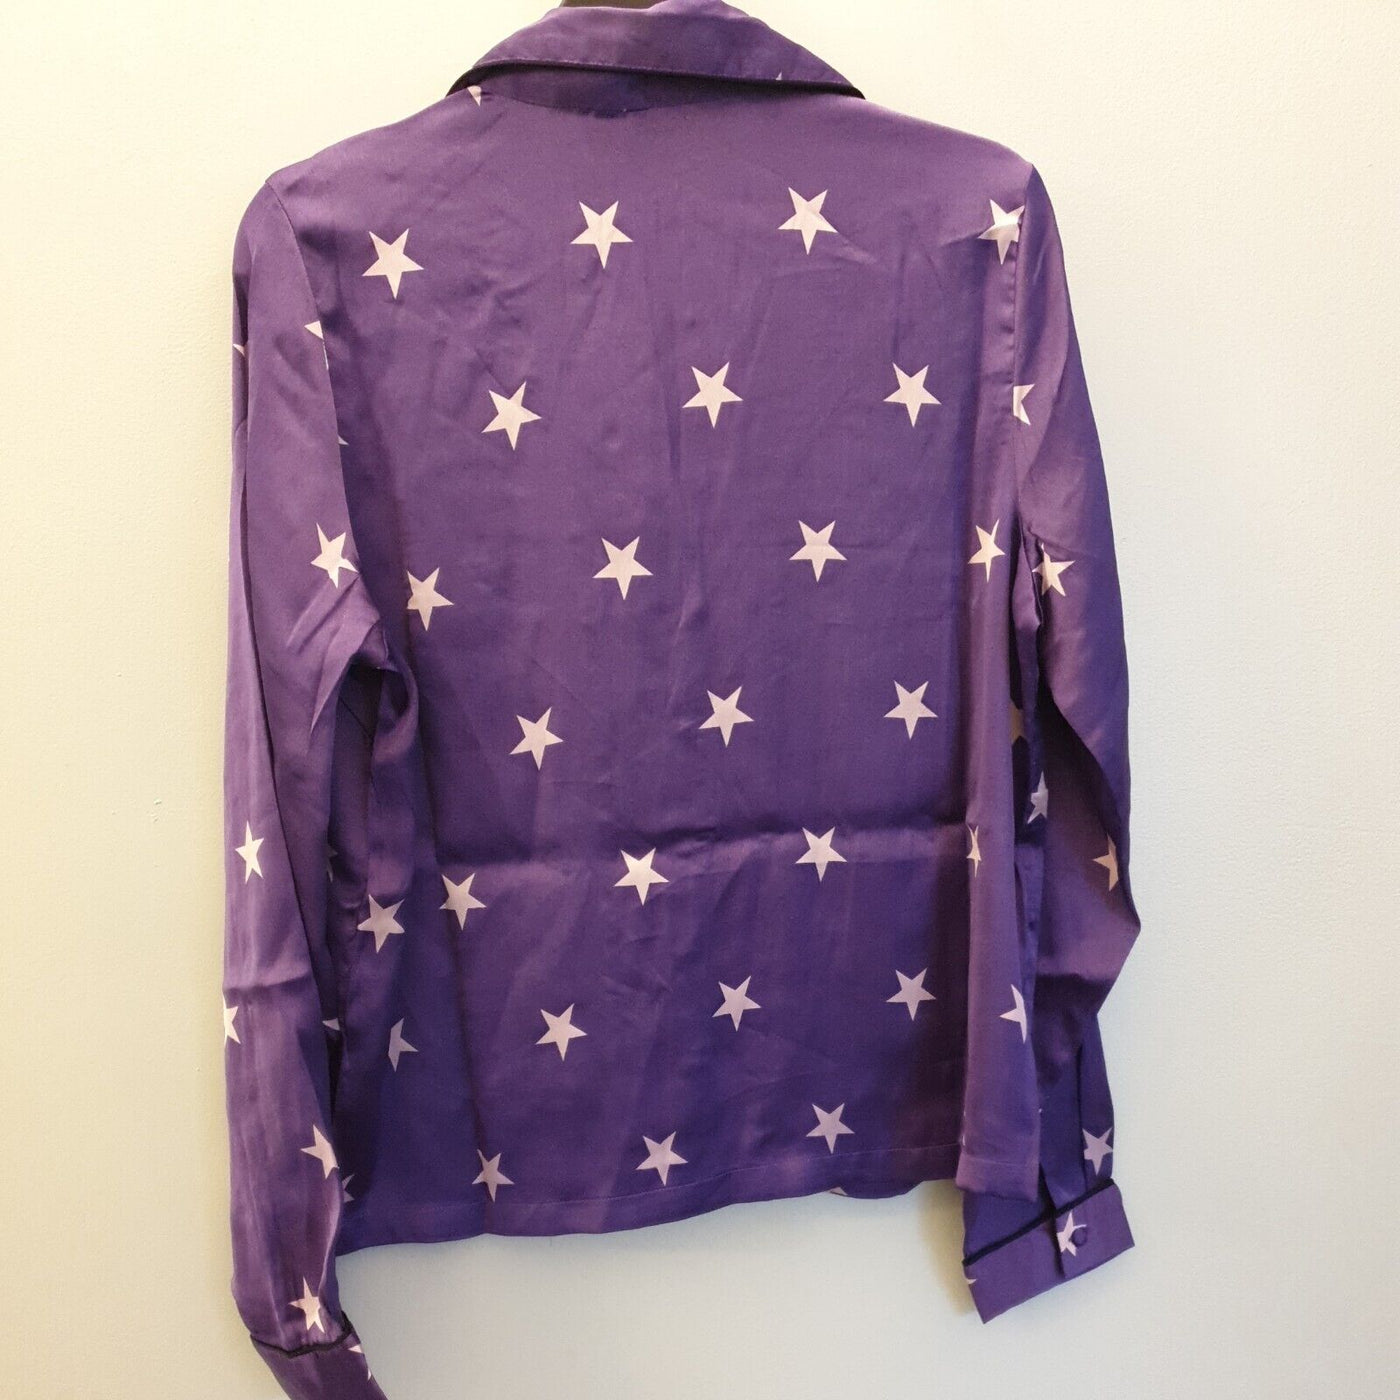 Pieces Satin Star Print Pajama Set Violet Star UkXS****Ref V276